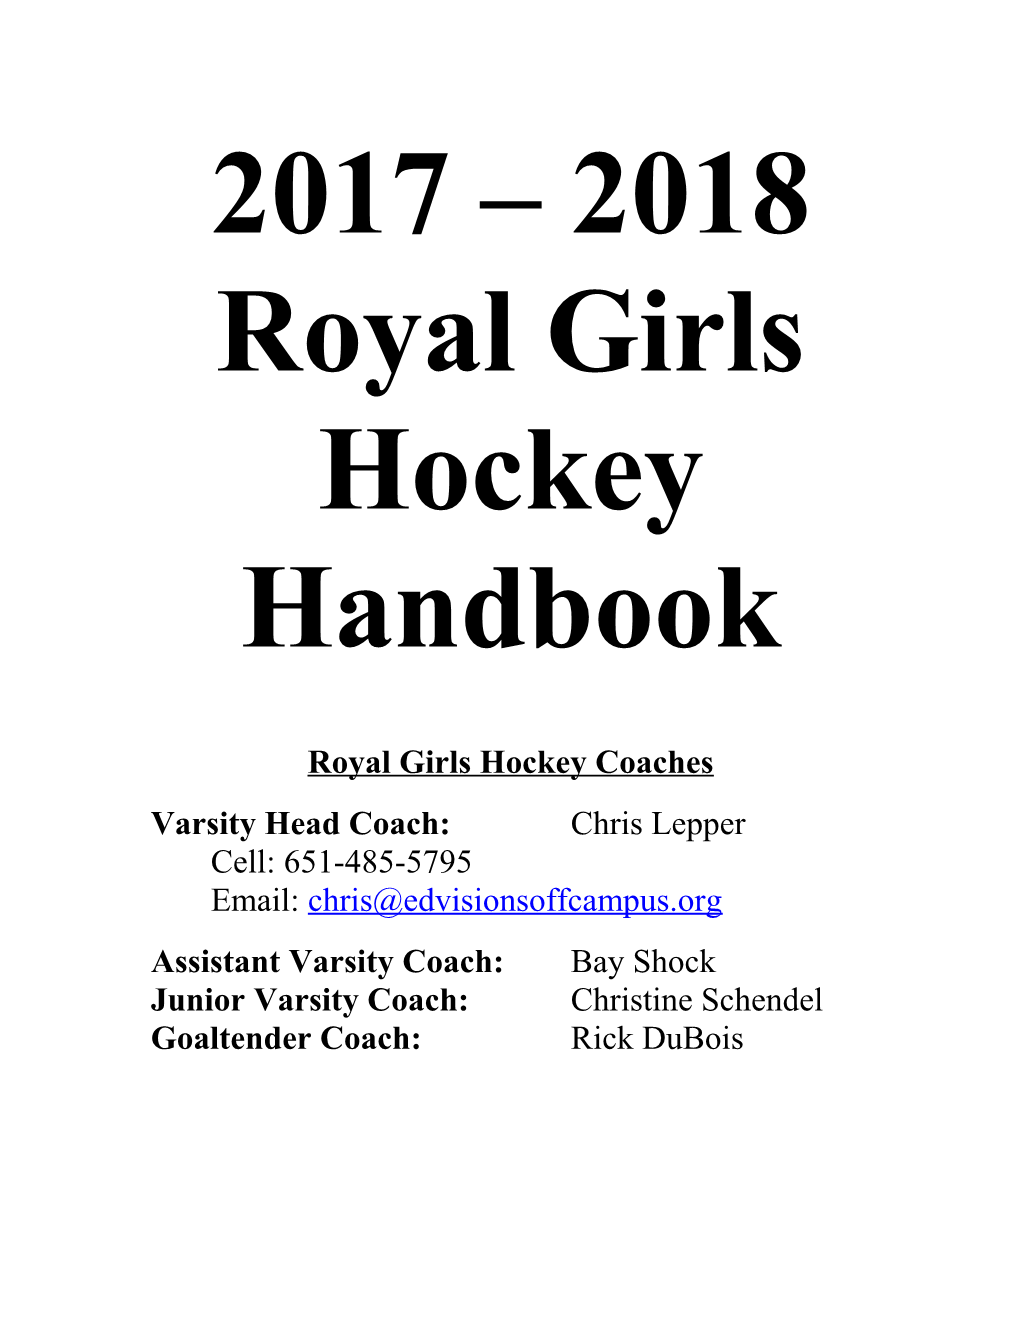 Royal Girls Hockey Coaches